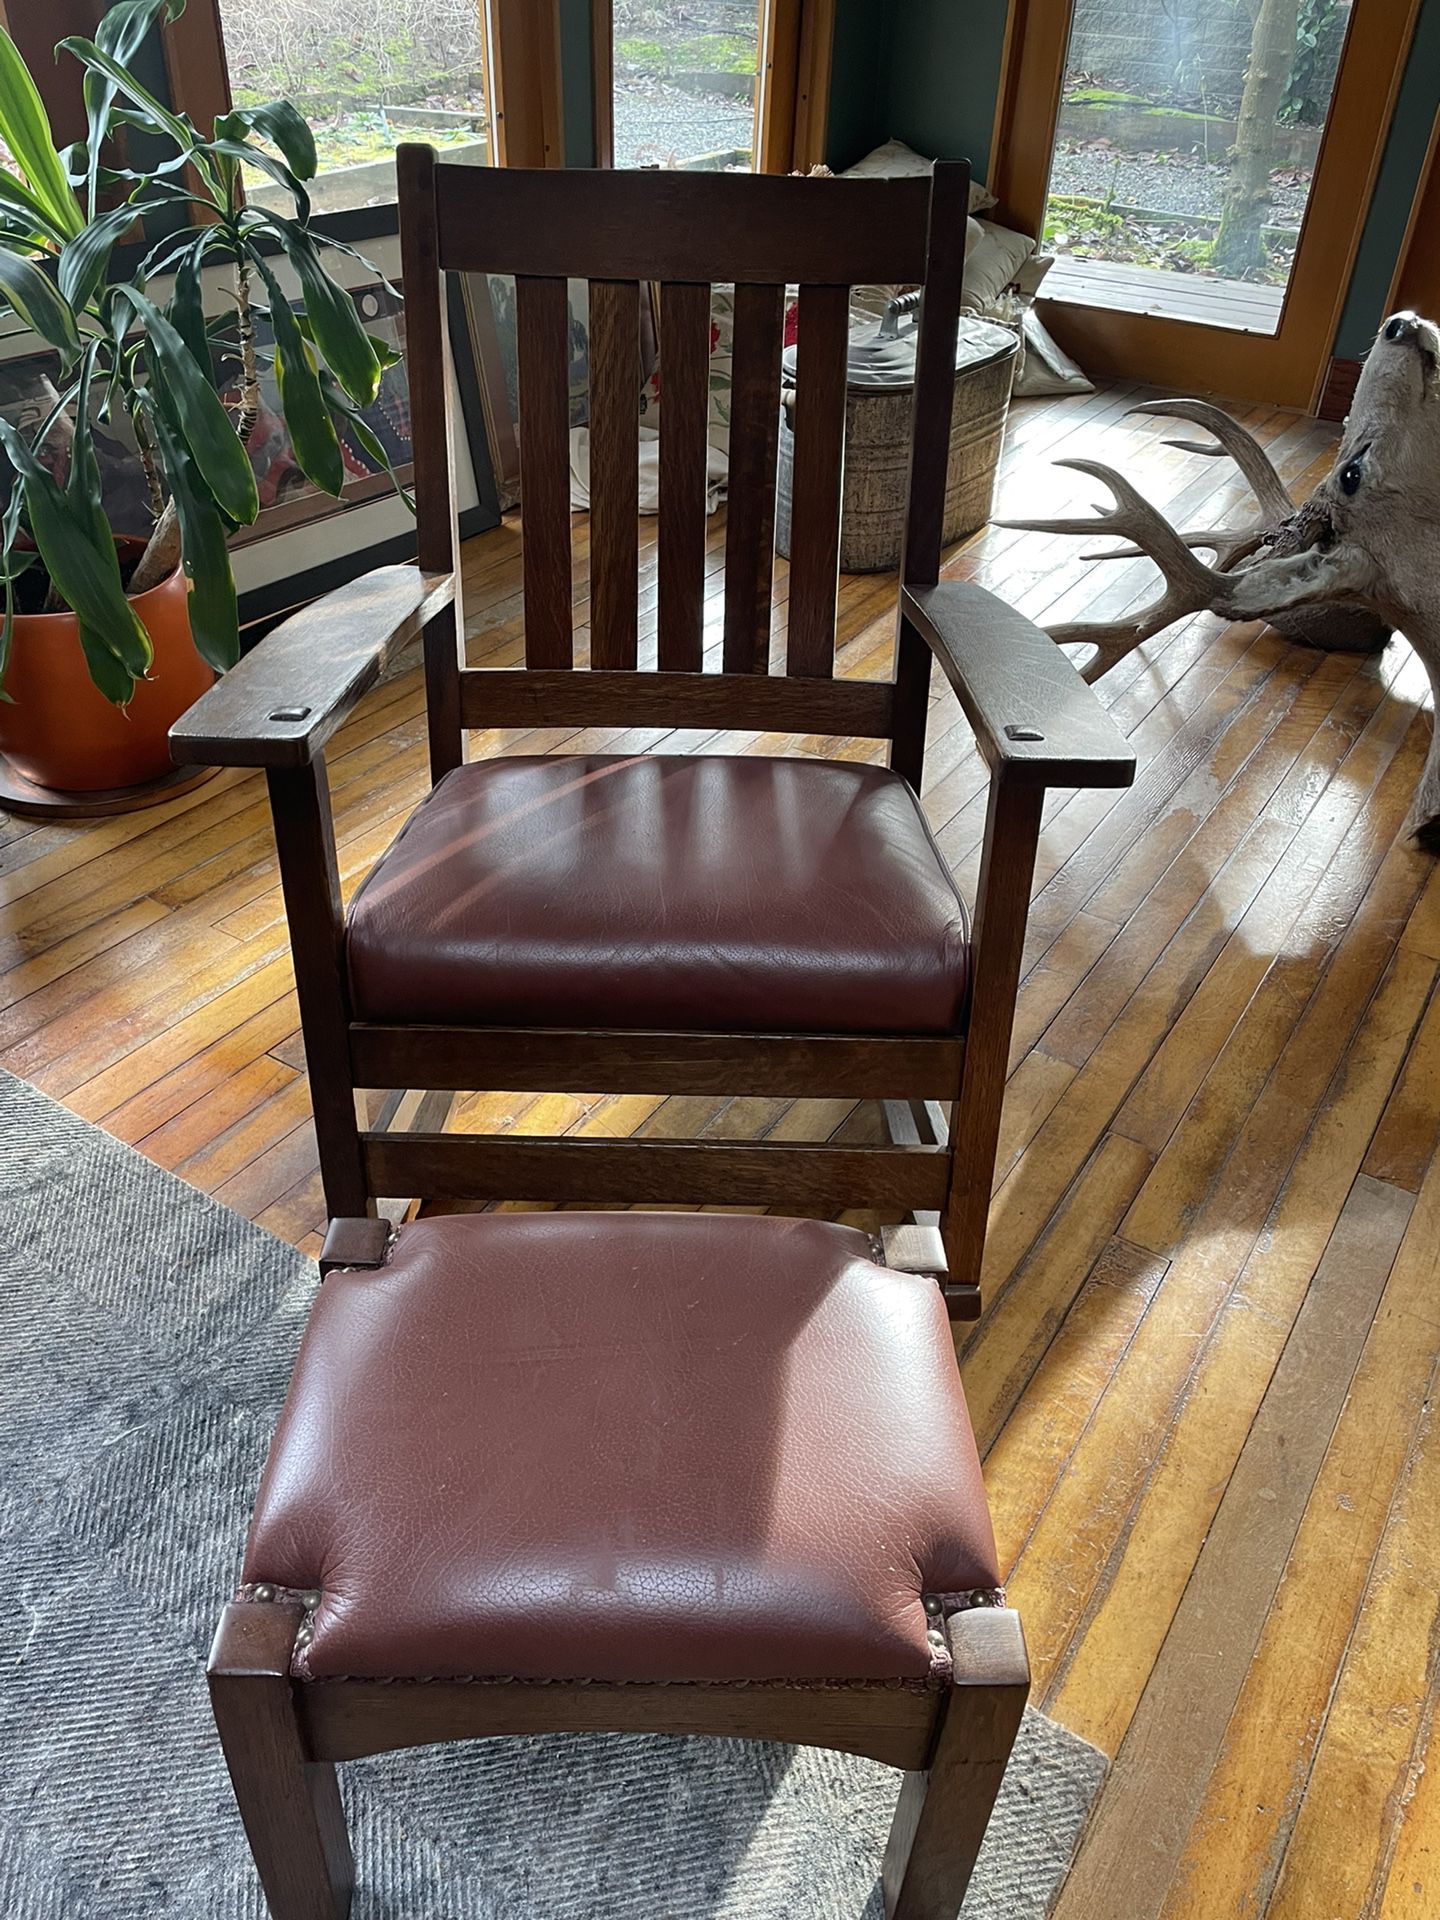 1930’s Vintage Rocking Chair & Ottoman